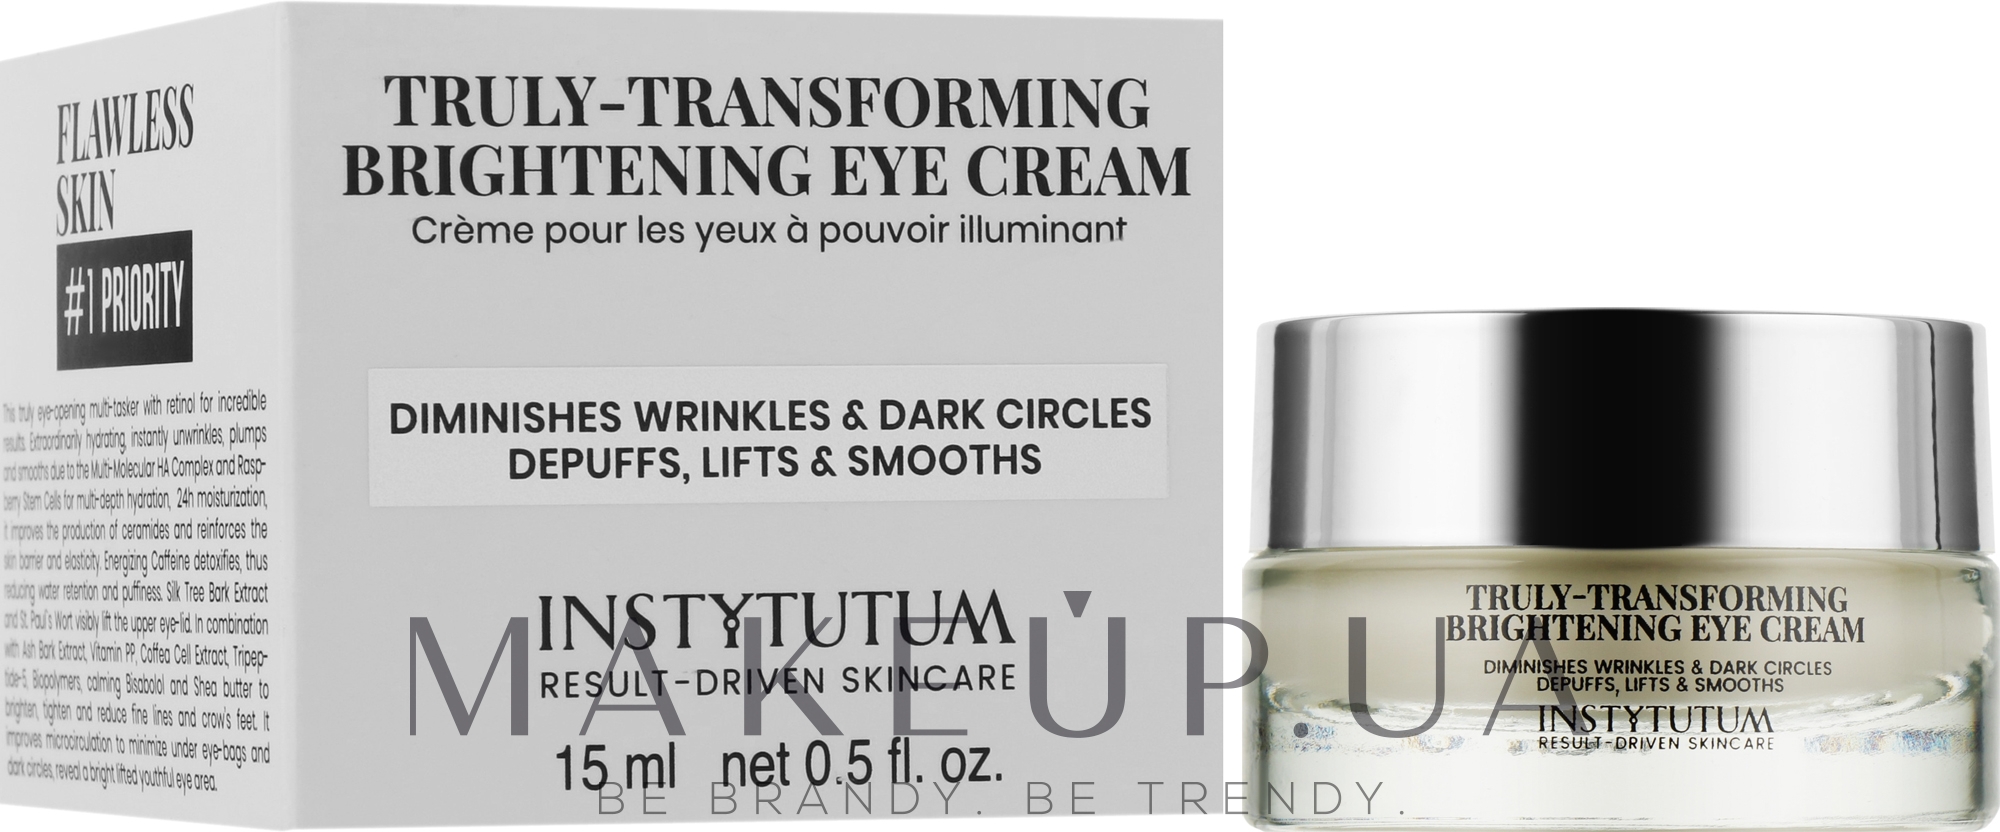 Освітлювальний крем для області навколо очей - Instytutum Truly-Transforming Brightening Eye Cream — фото 15ml